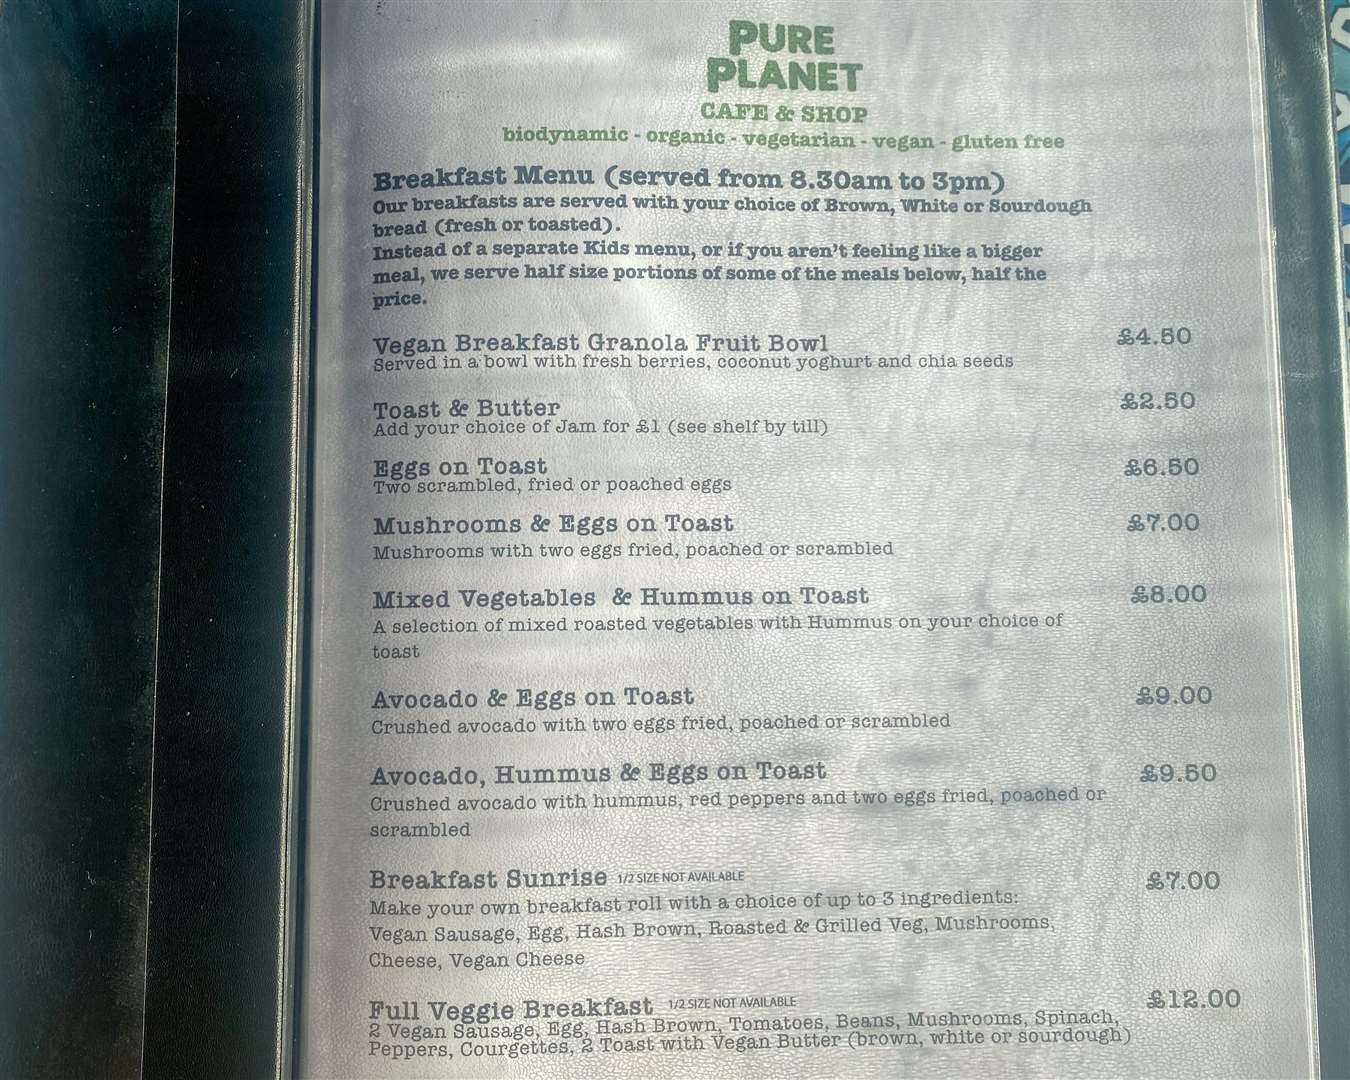 The entire menu is fully vegetarian and vegan